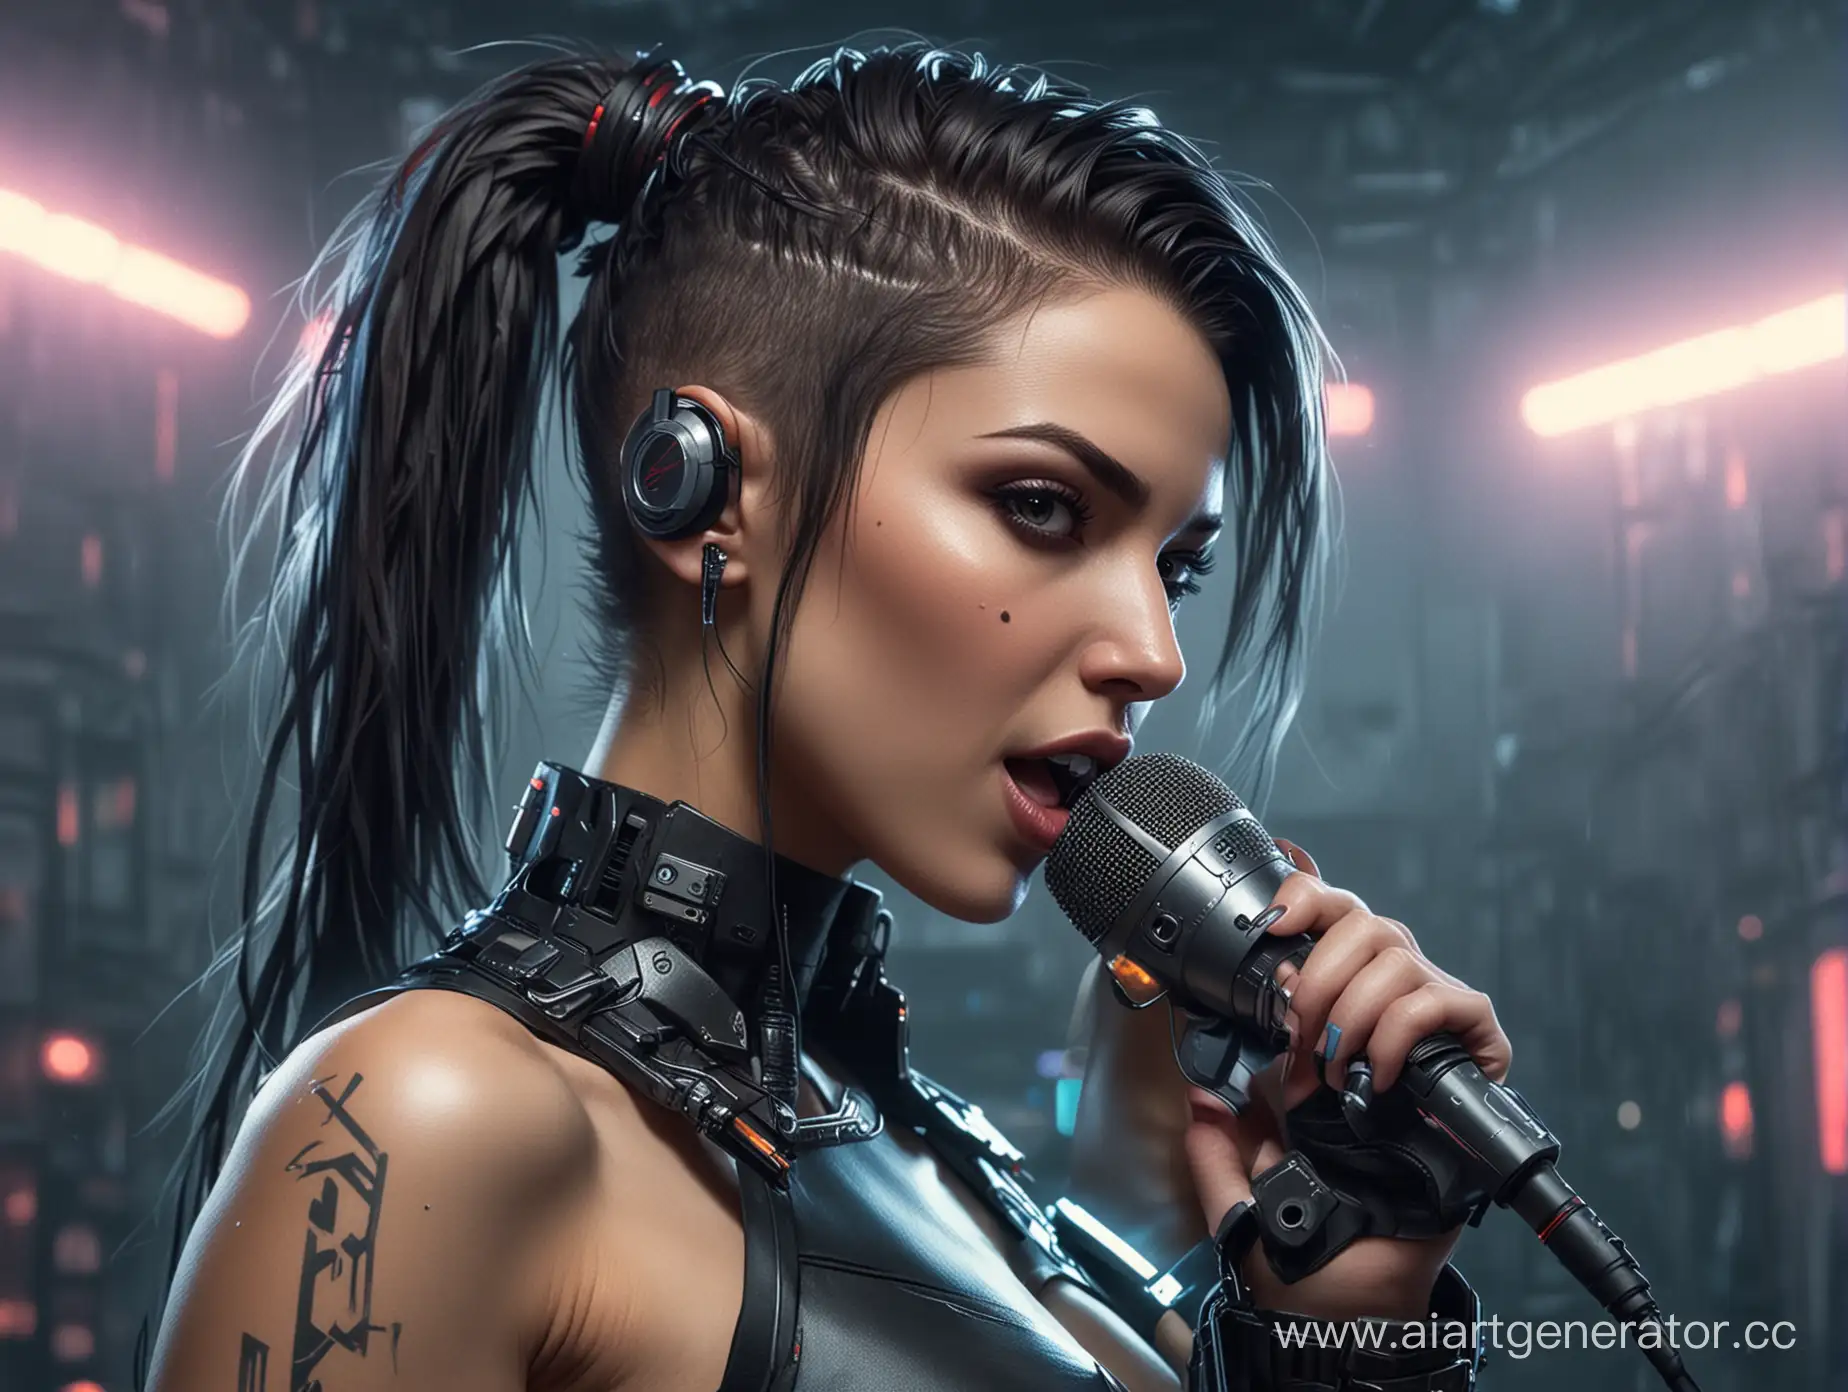 Cyberpunk-Woman-Singing-with-Microphone-in-Futuristic-Setting